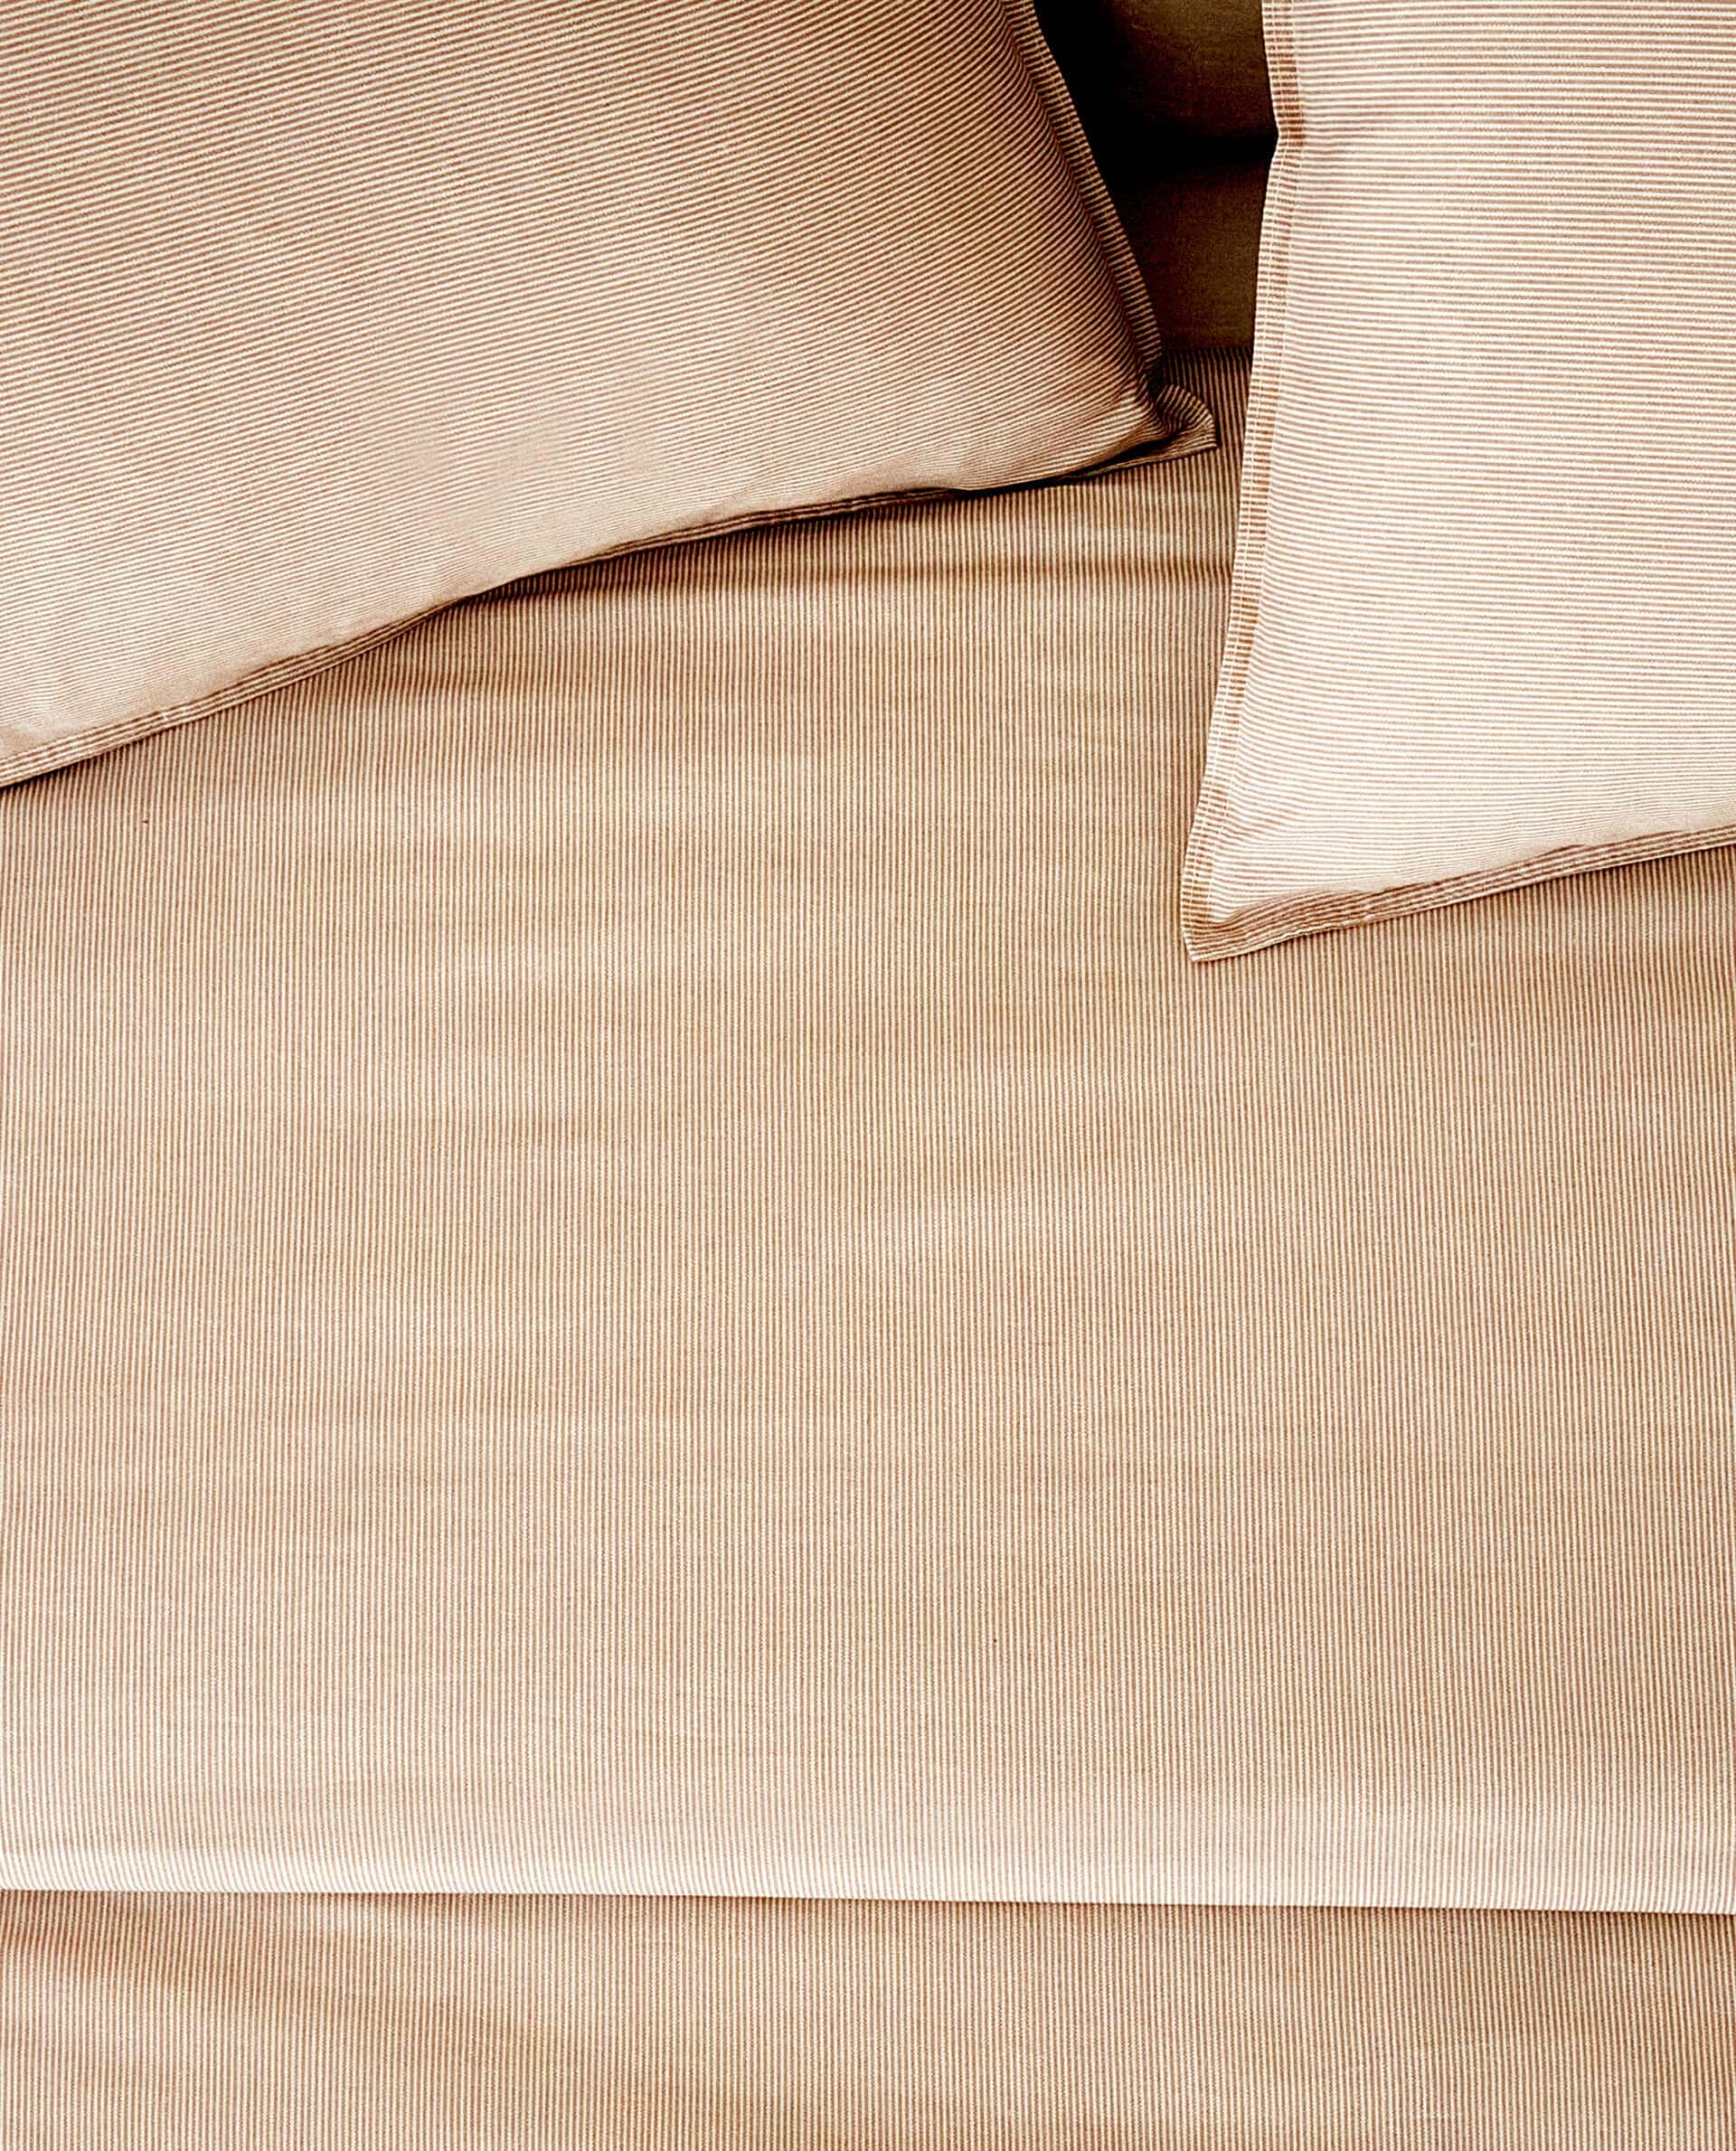 Zara Home Striped Cotton Duvet Cover